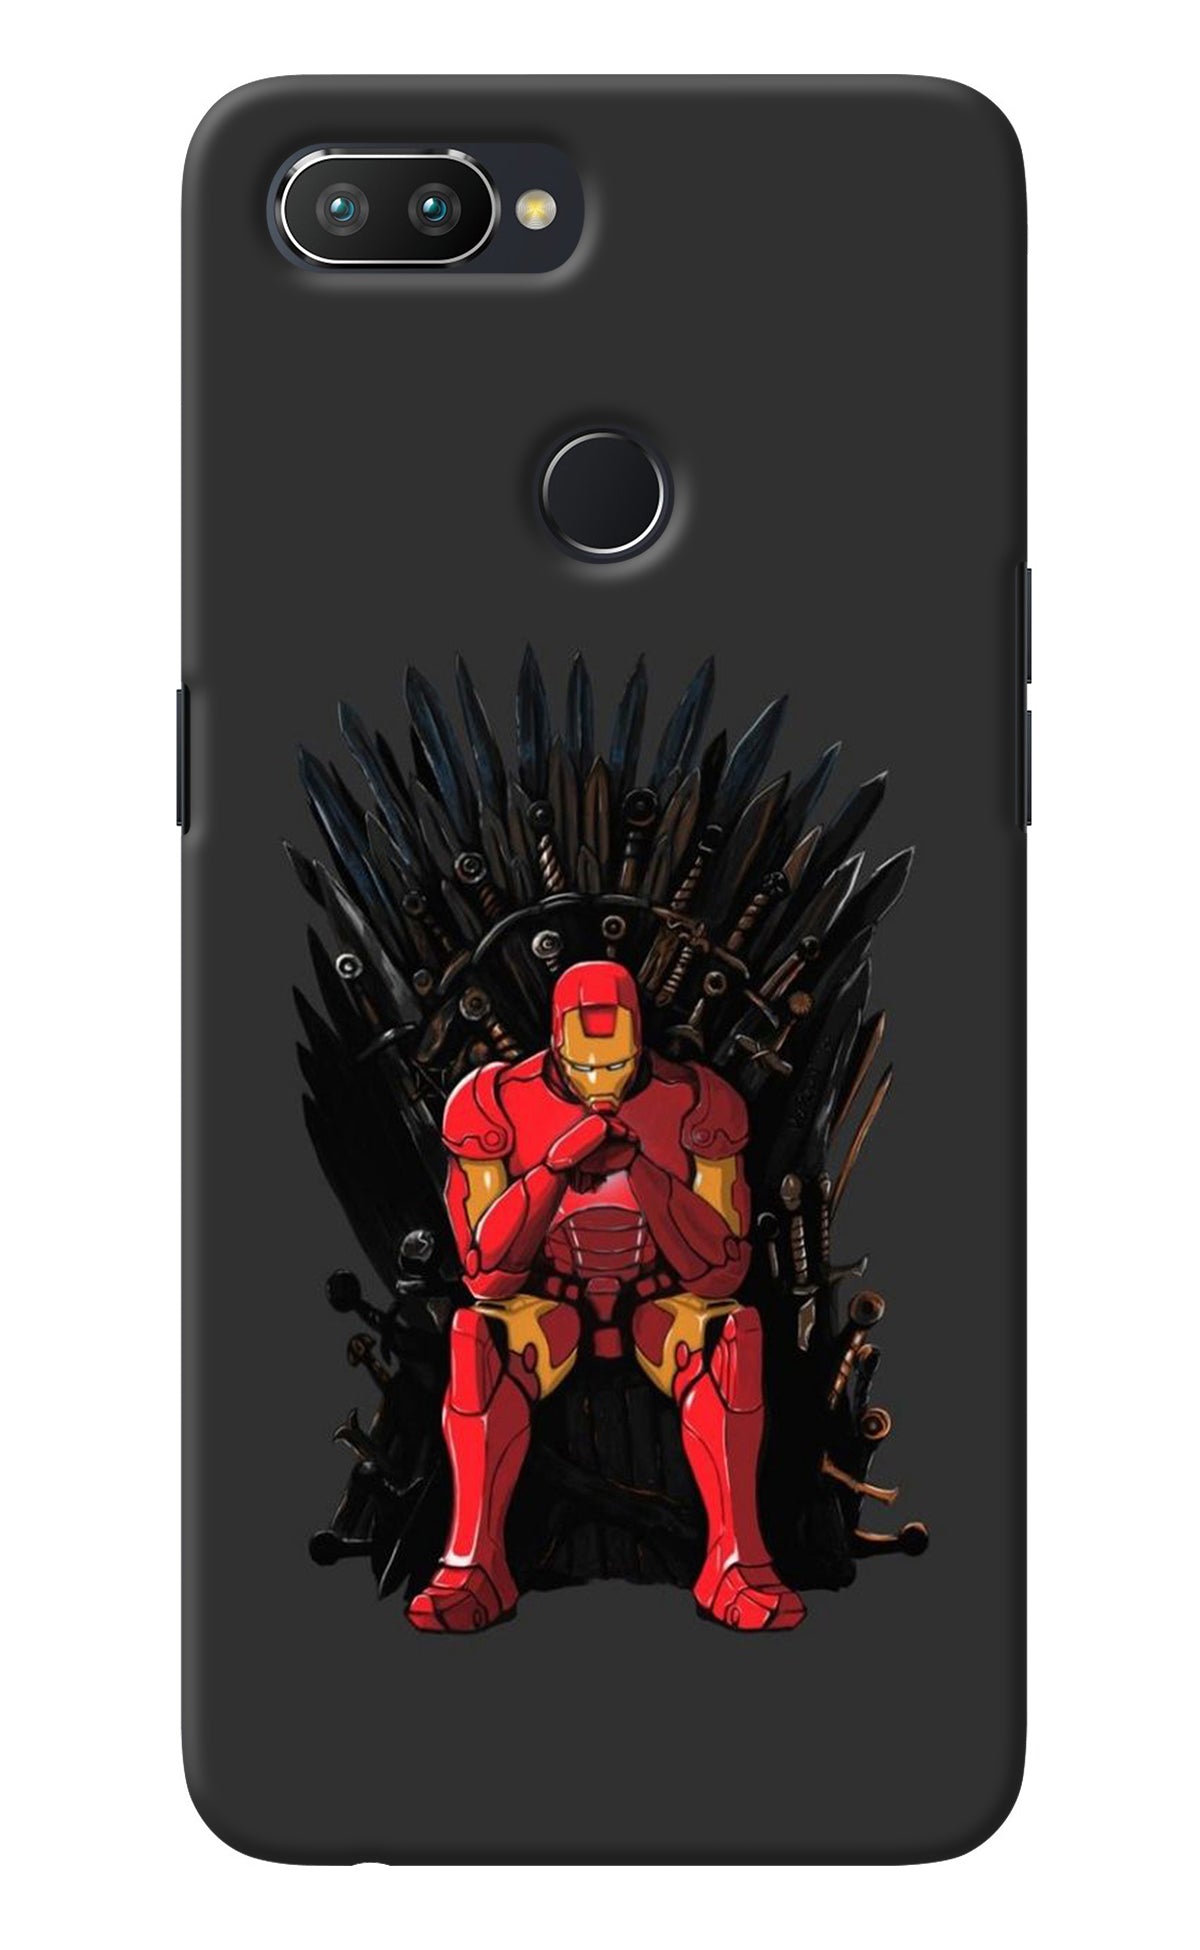 Ironman Throne Realme 2 Pro Back Cover